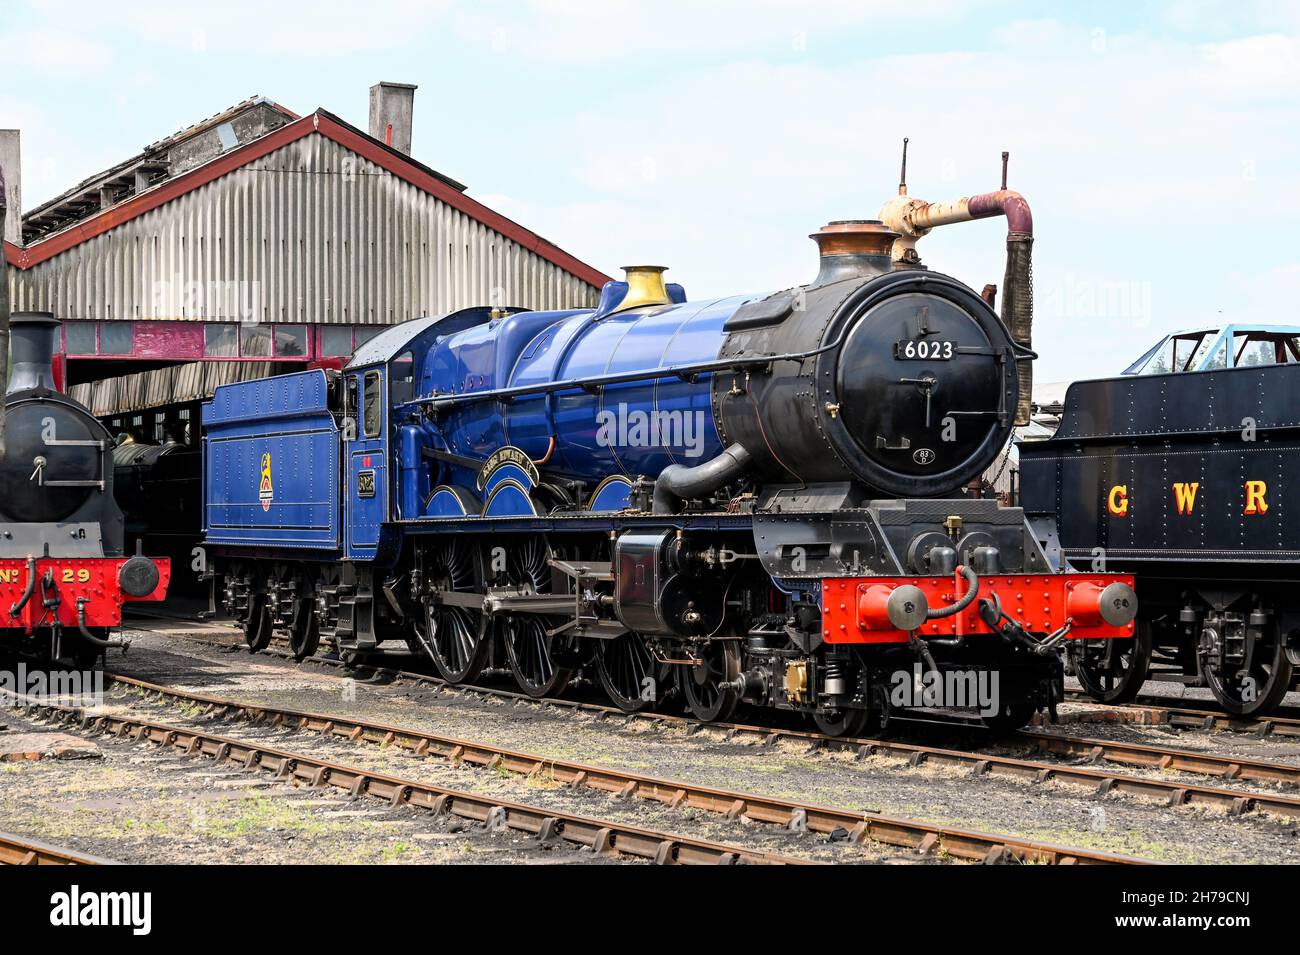 Didcot, England - June 2021: Vintage steam engine outside an engine shed alongside other locomotives Stock Photo